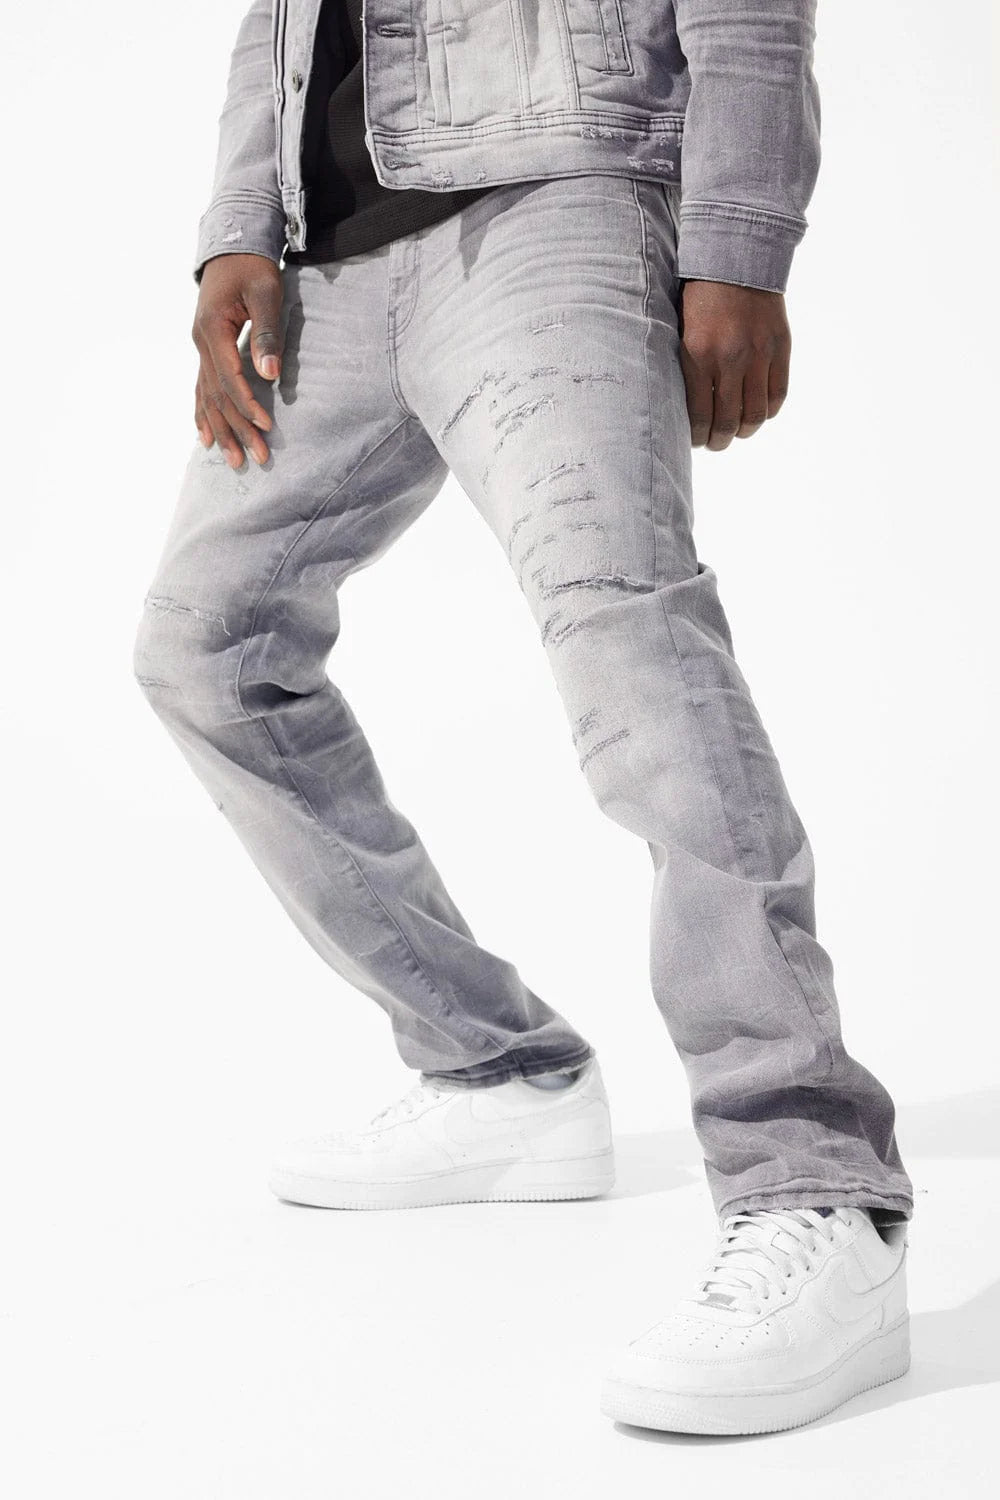 Collins - Amsterdam Monochrome Denim Jeans - Arctic Grey